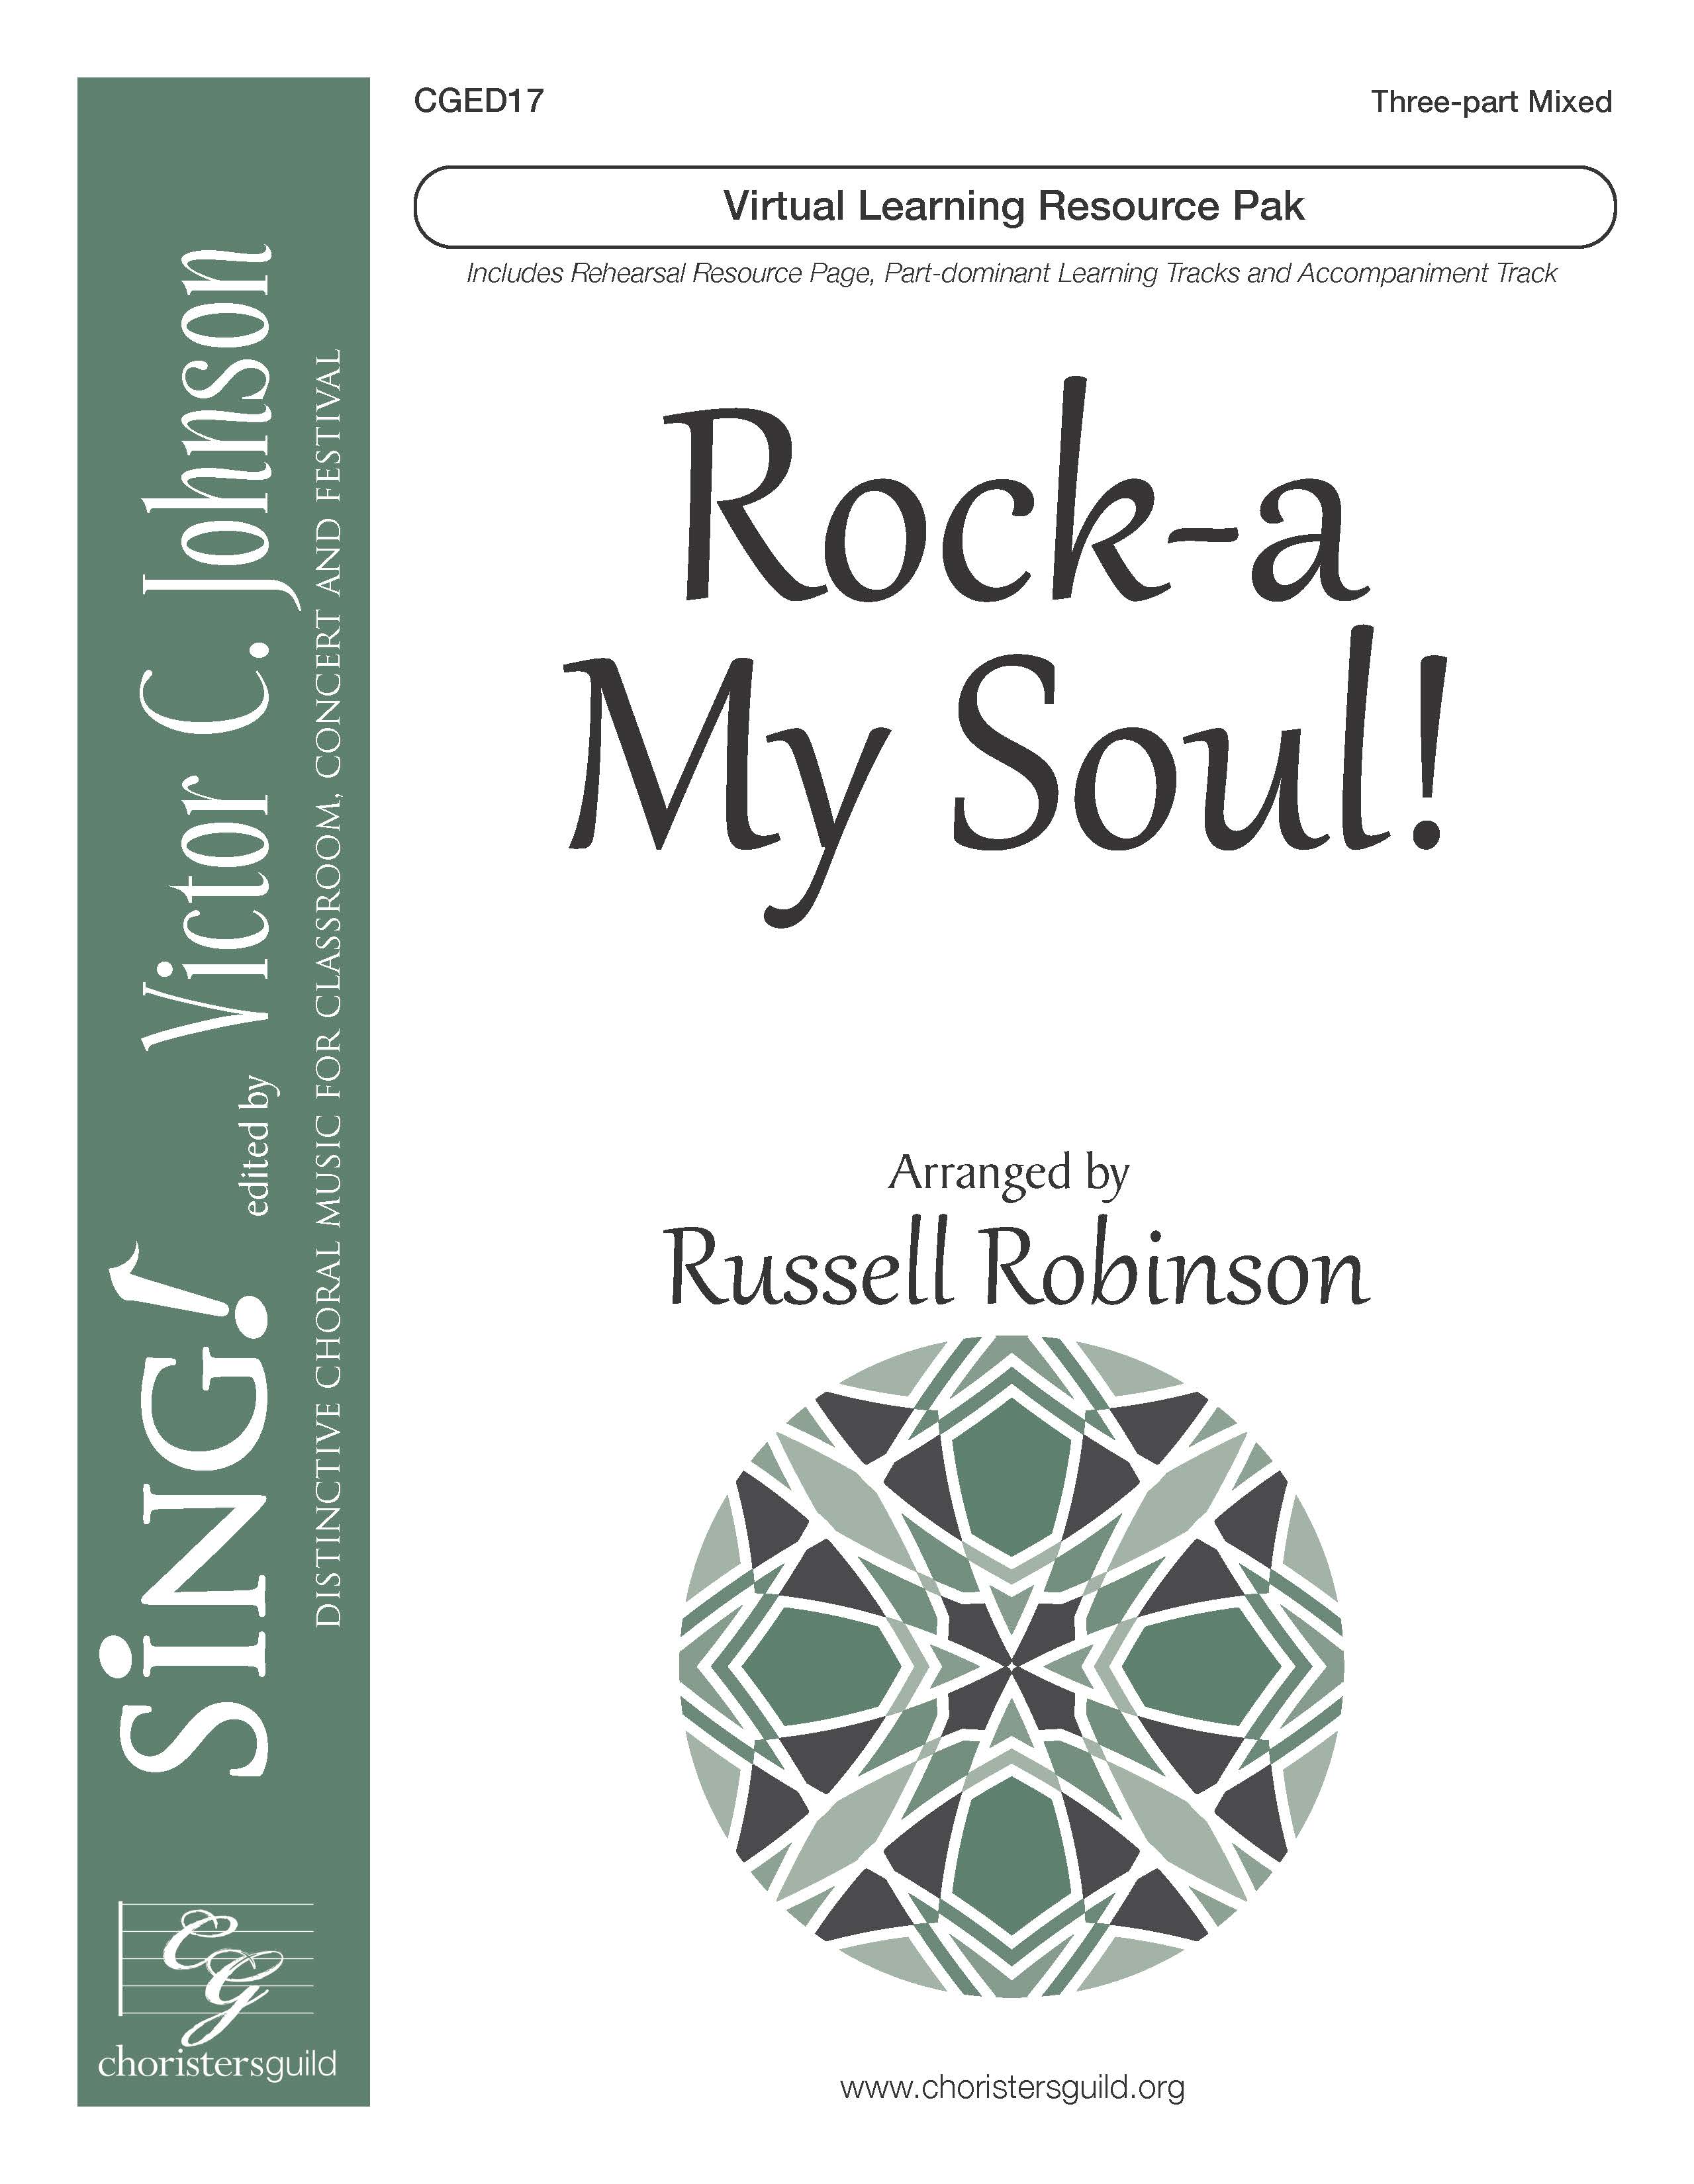 Rock-a My Soul (Virtual Learning Resource Pak) - Three-part Mixed